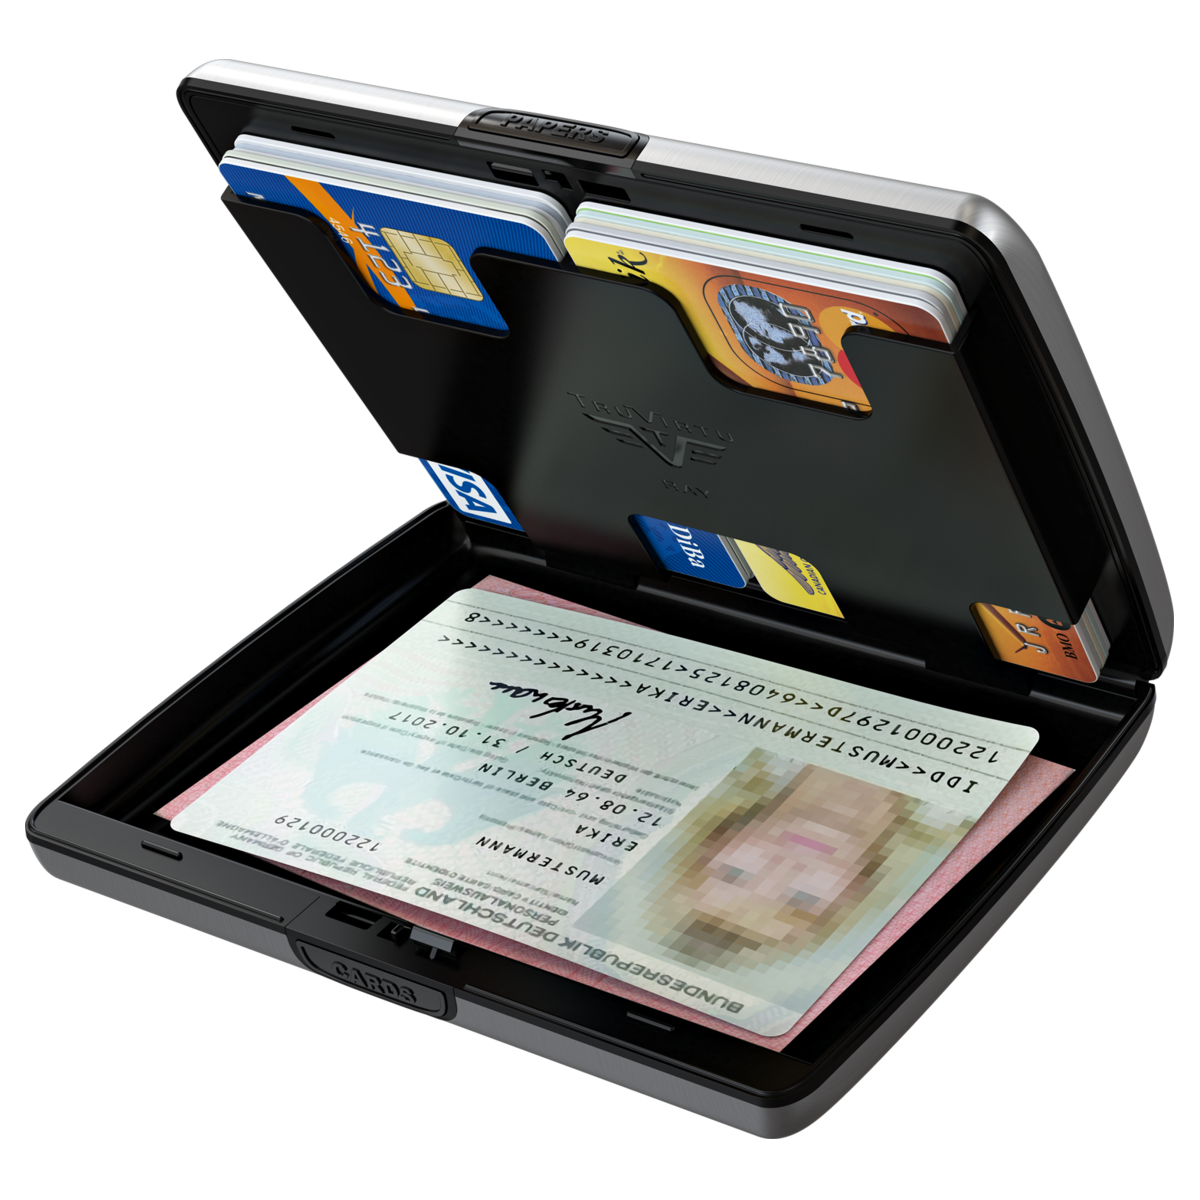 TRU VIRTU Aluminum Wallet Ray - Paper & Cards - Leather Line - Croco Brown